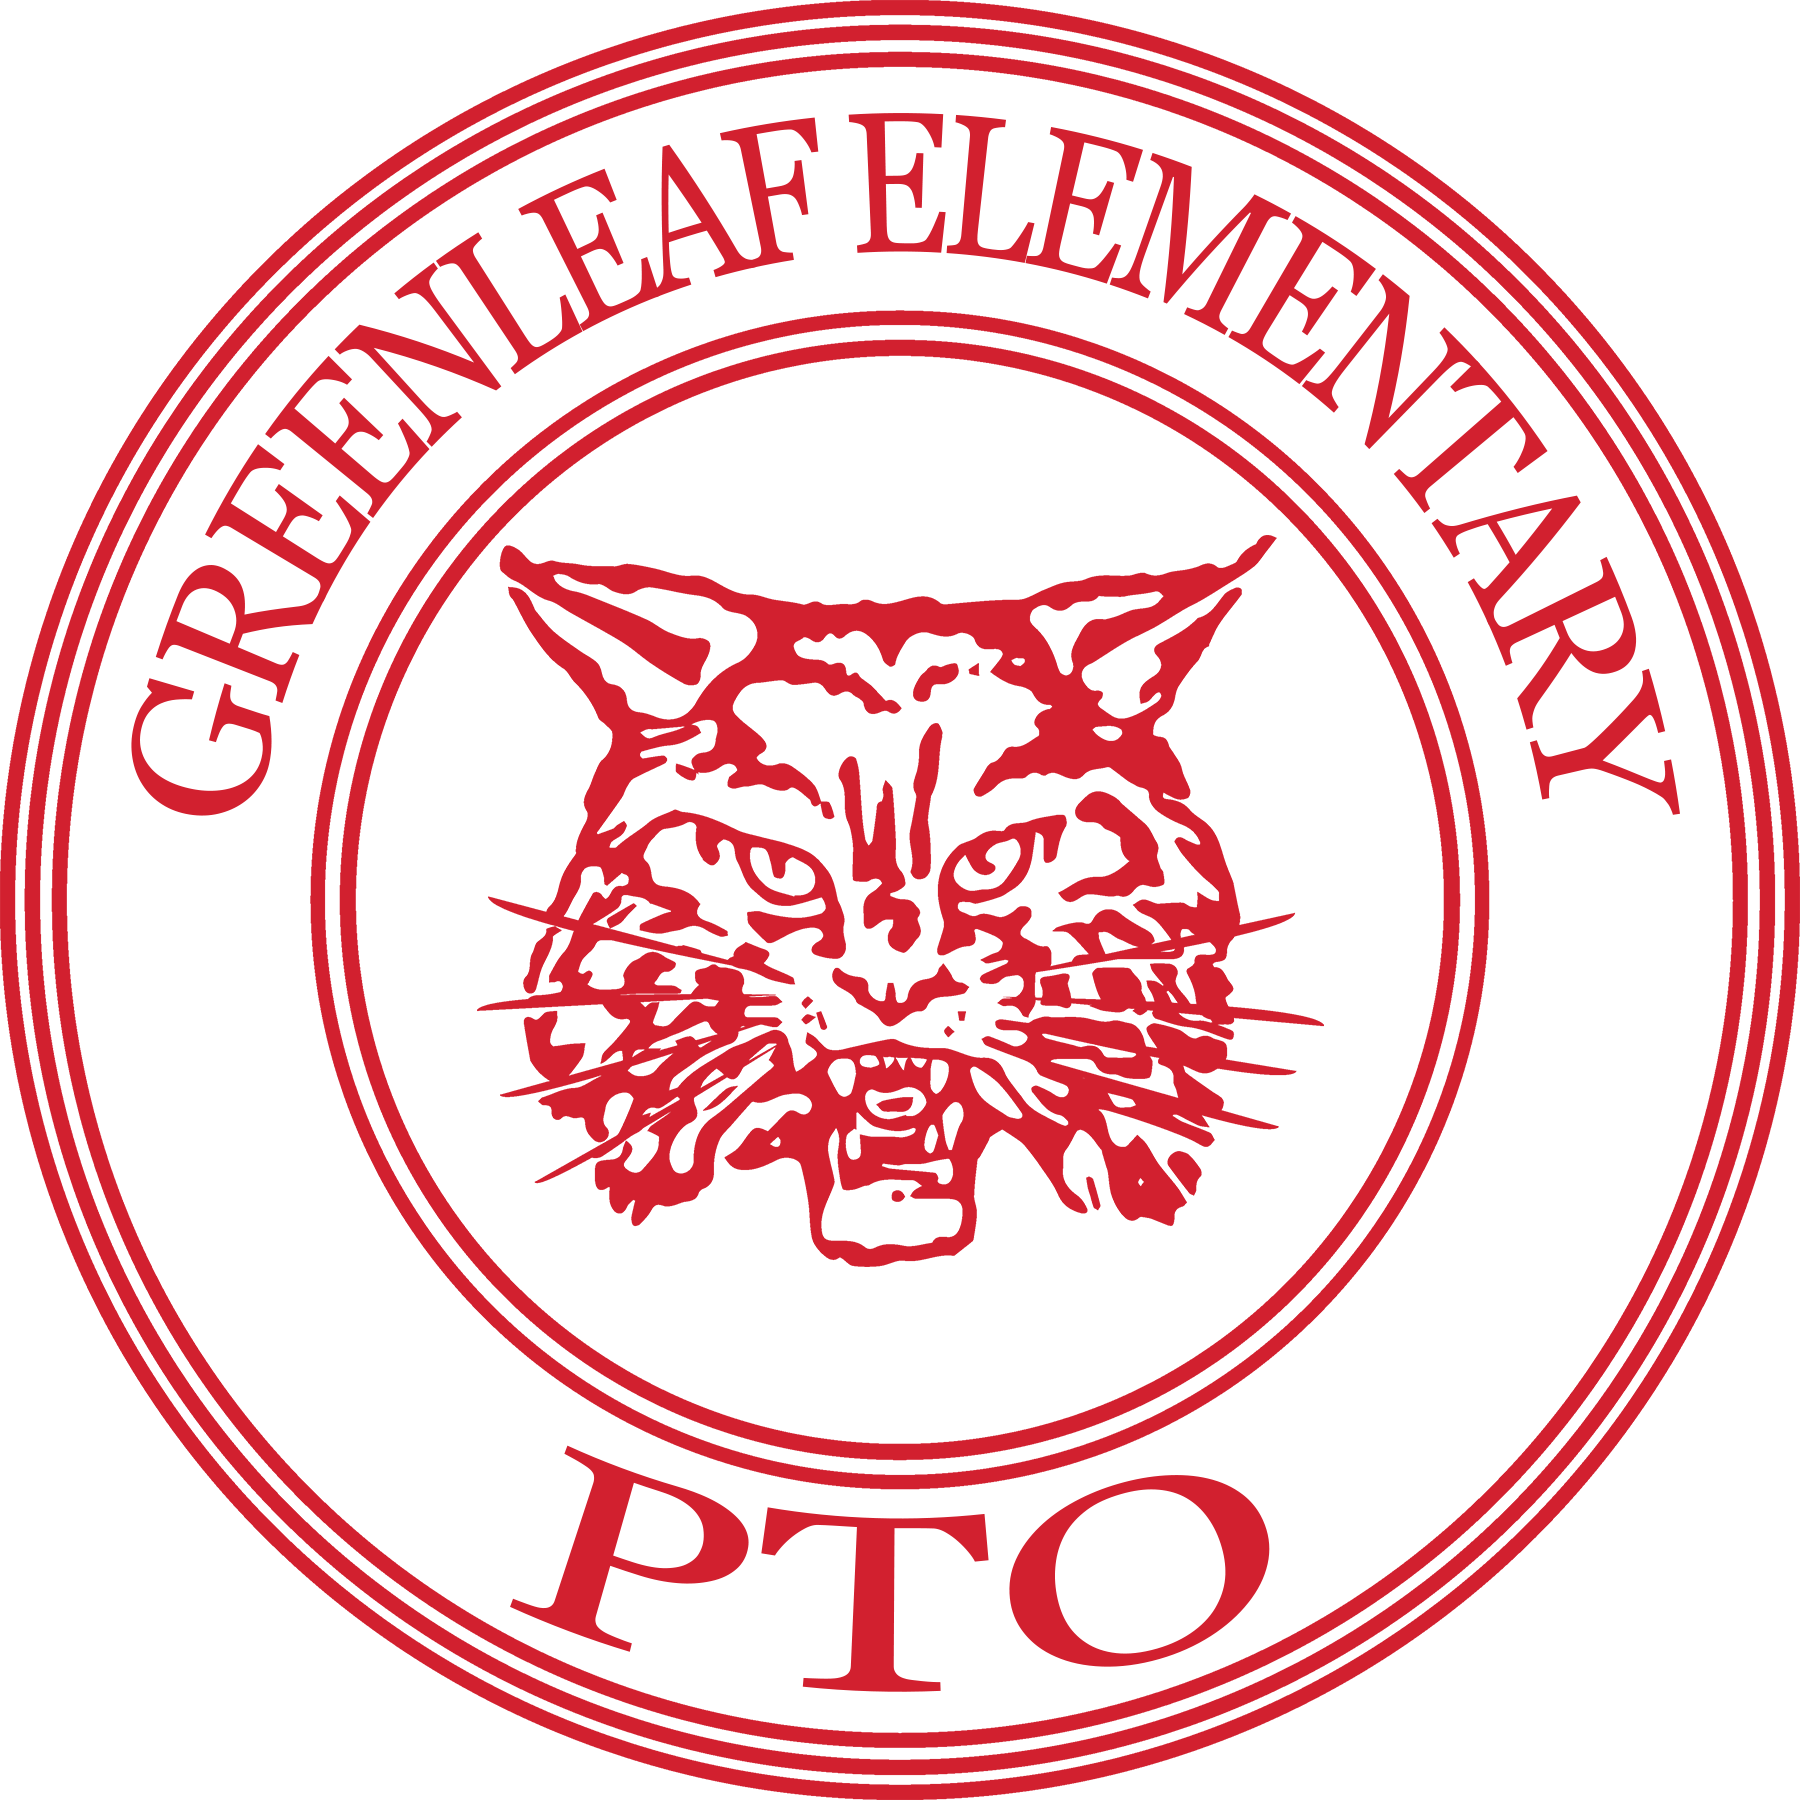 Paquete de útiles escolares de primer grado – Greenleaf PTO